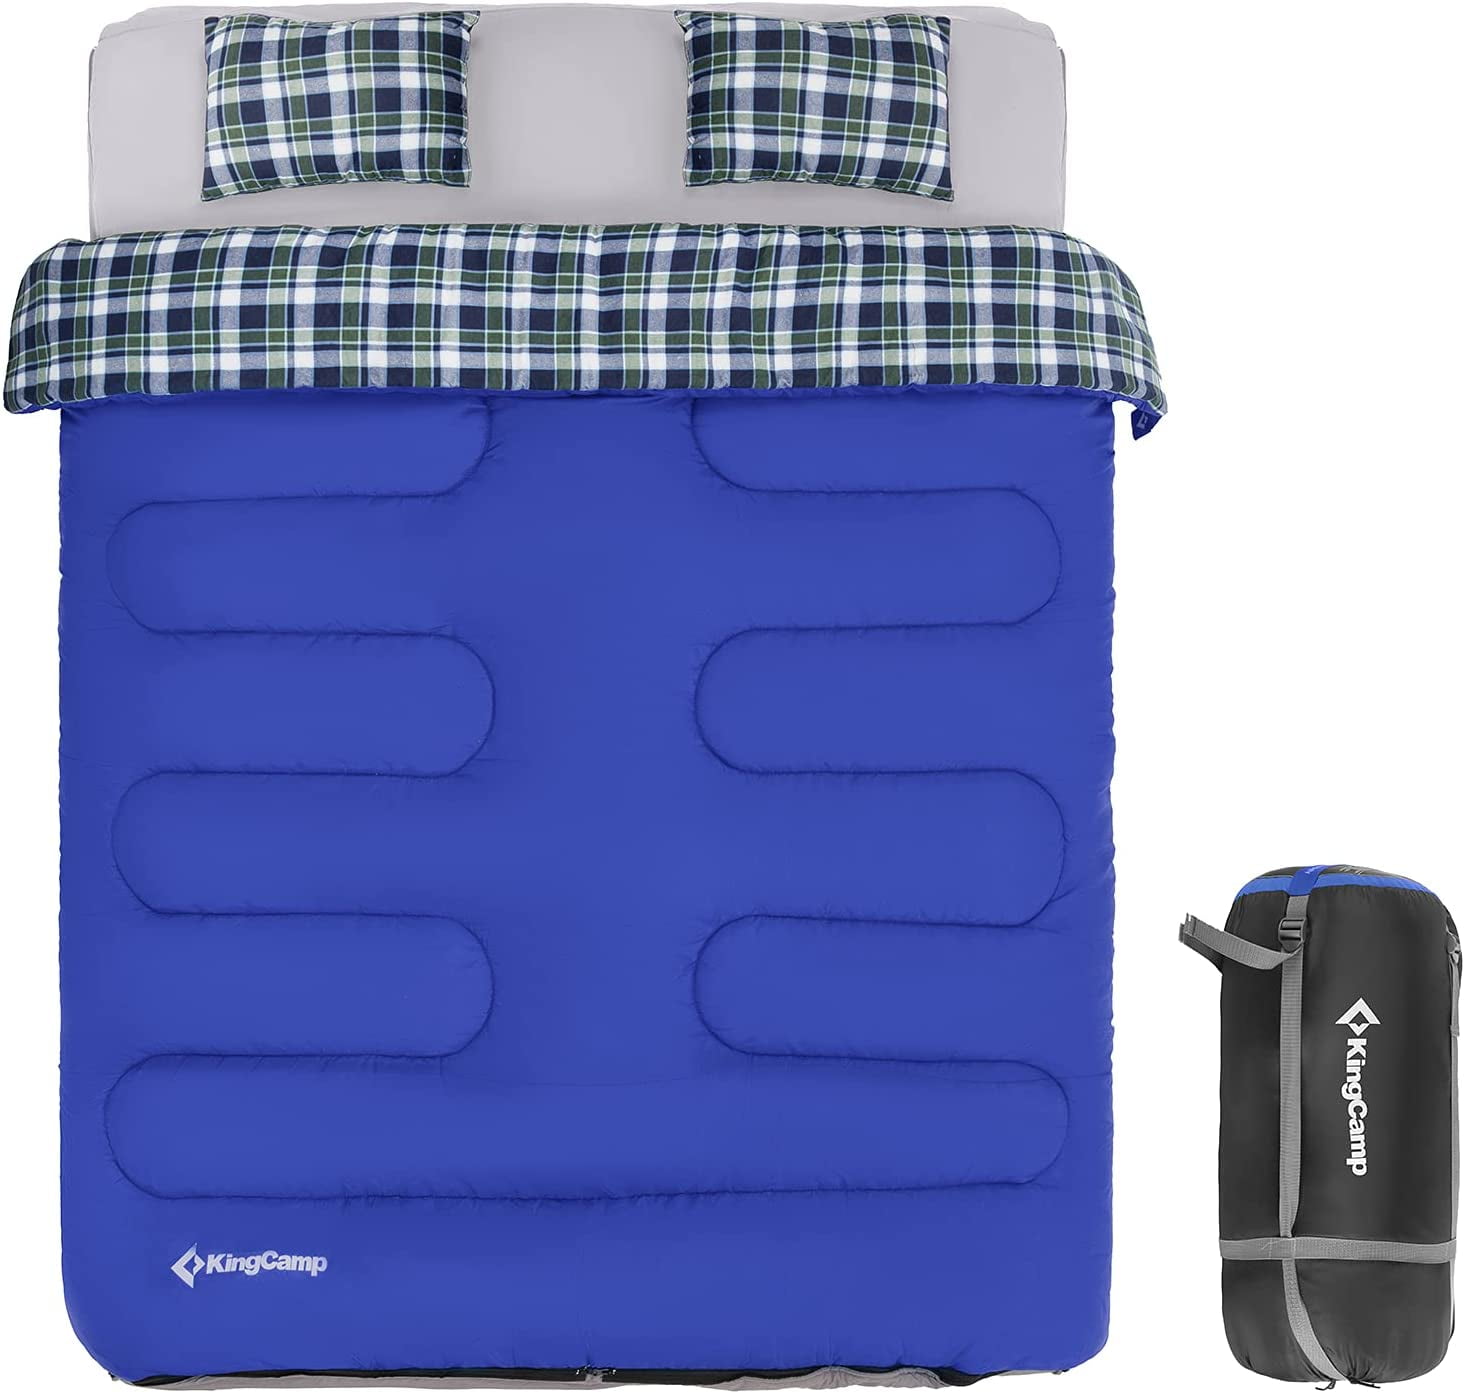 Sleepingo Double Sleeping Bag for Backpacking, Camping, Or Hiking